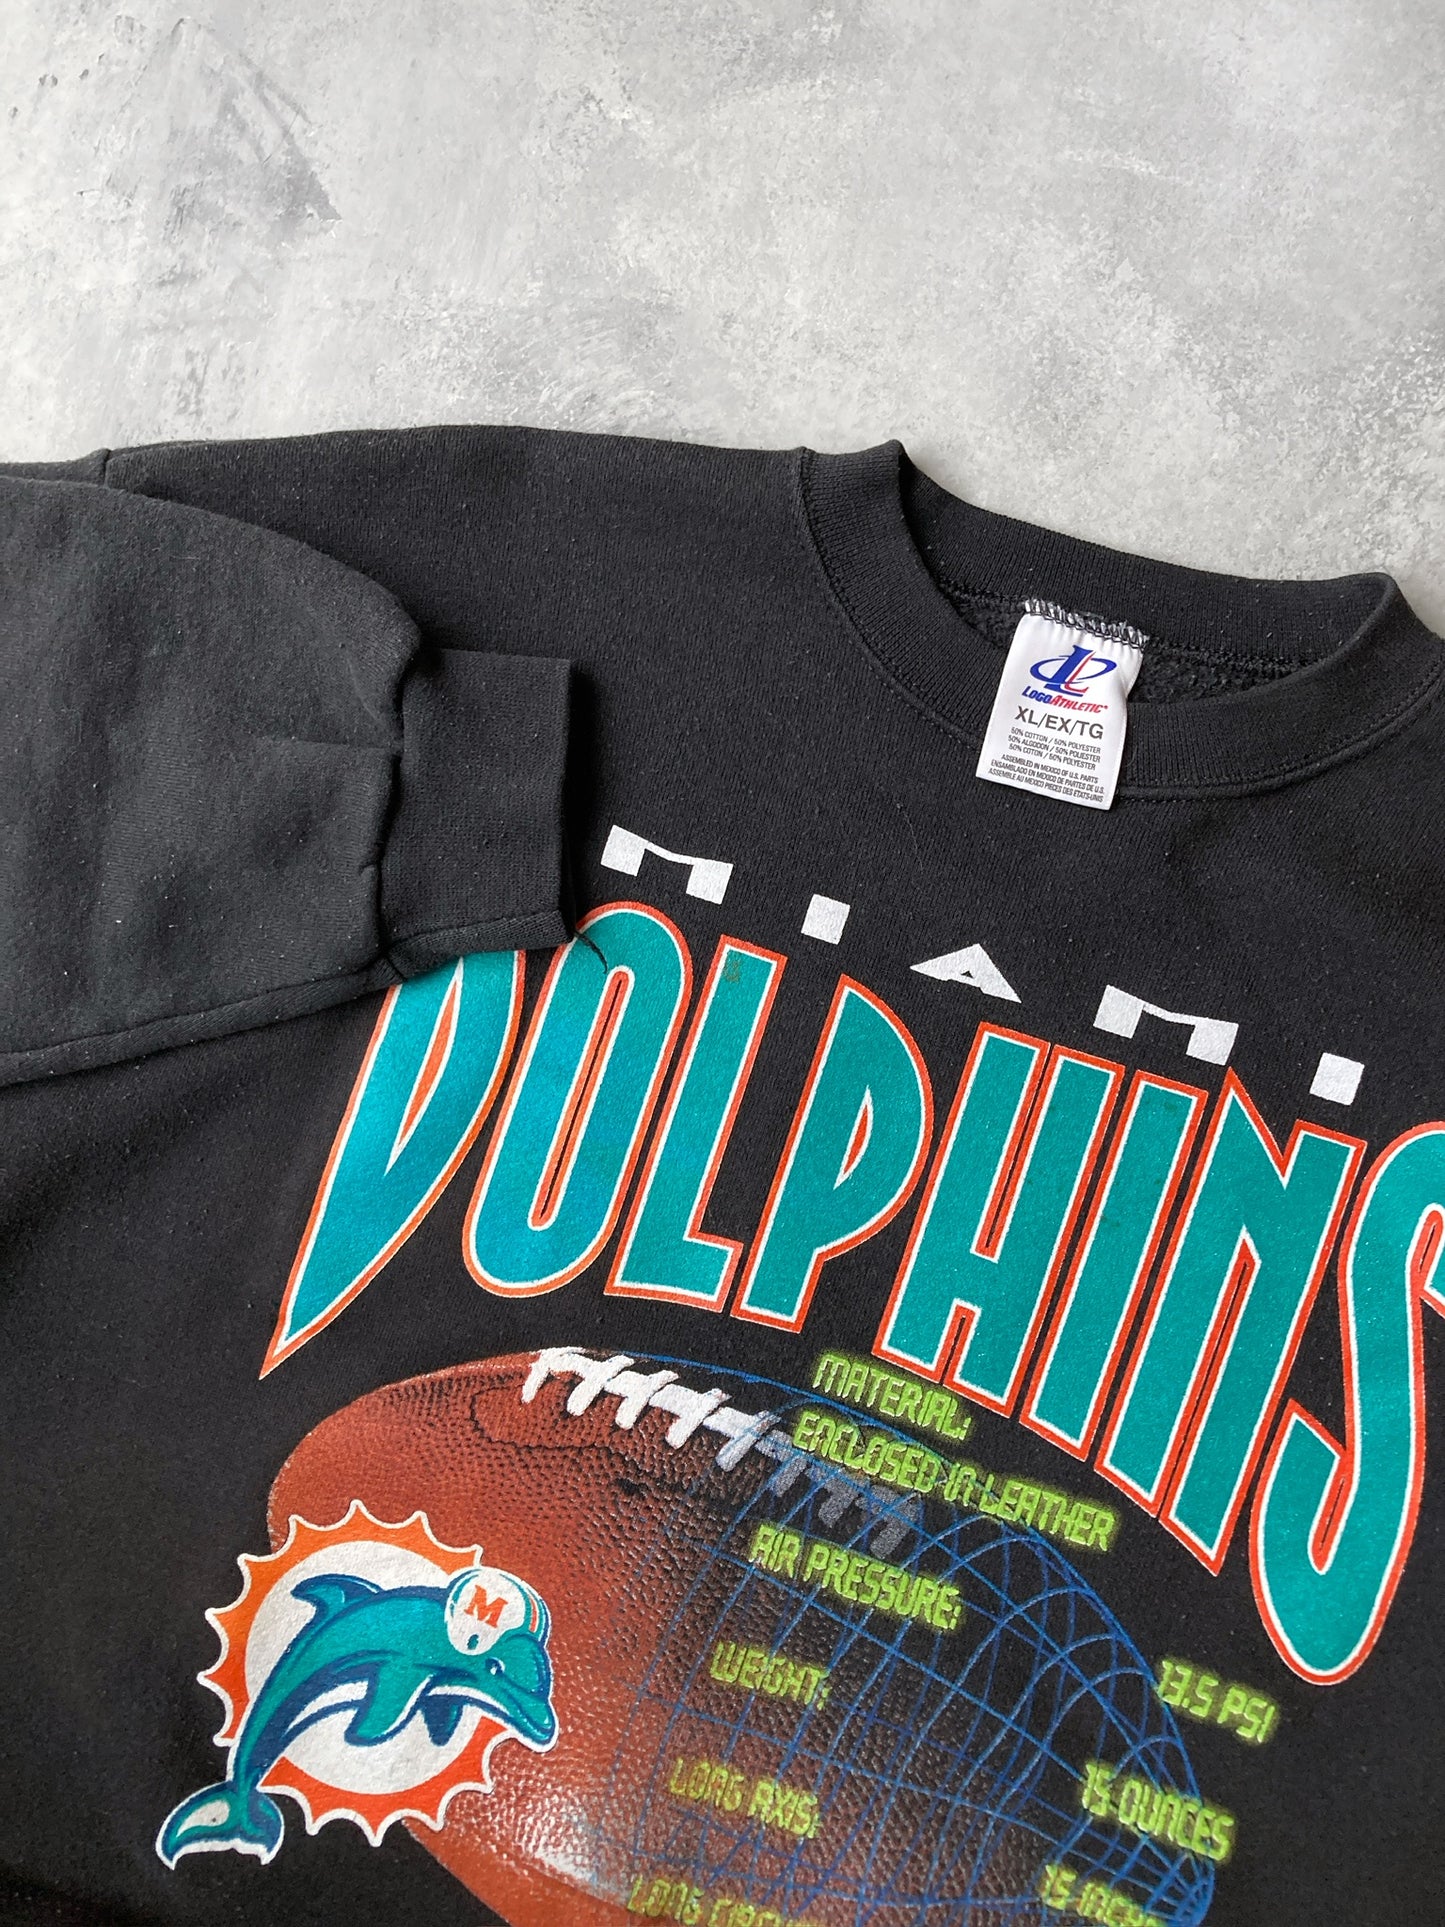 Miami Dolphins Sweatshirt 90's - XL